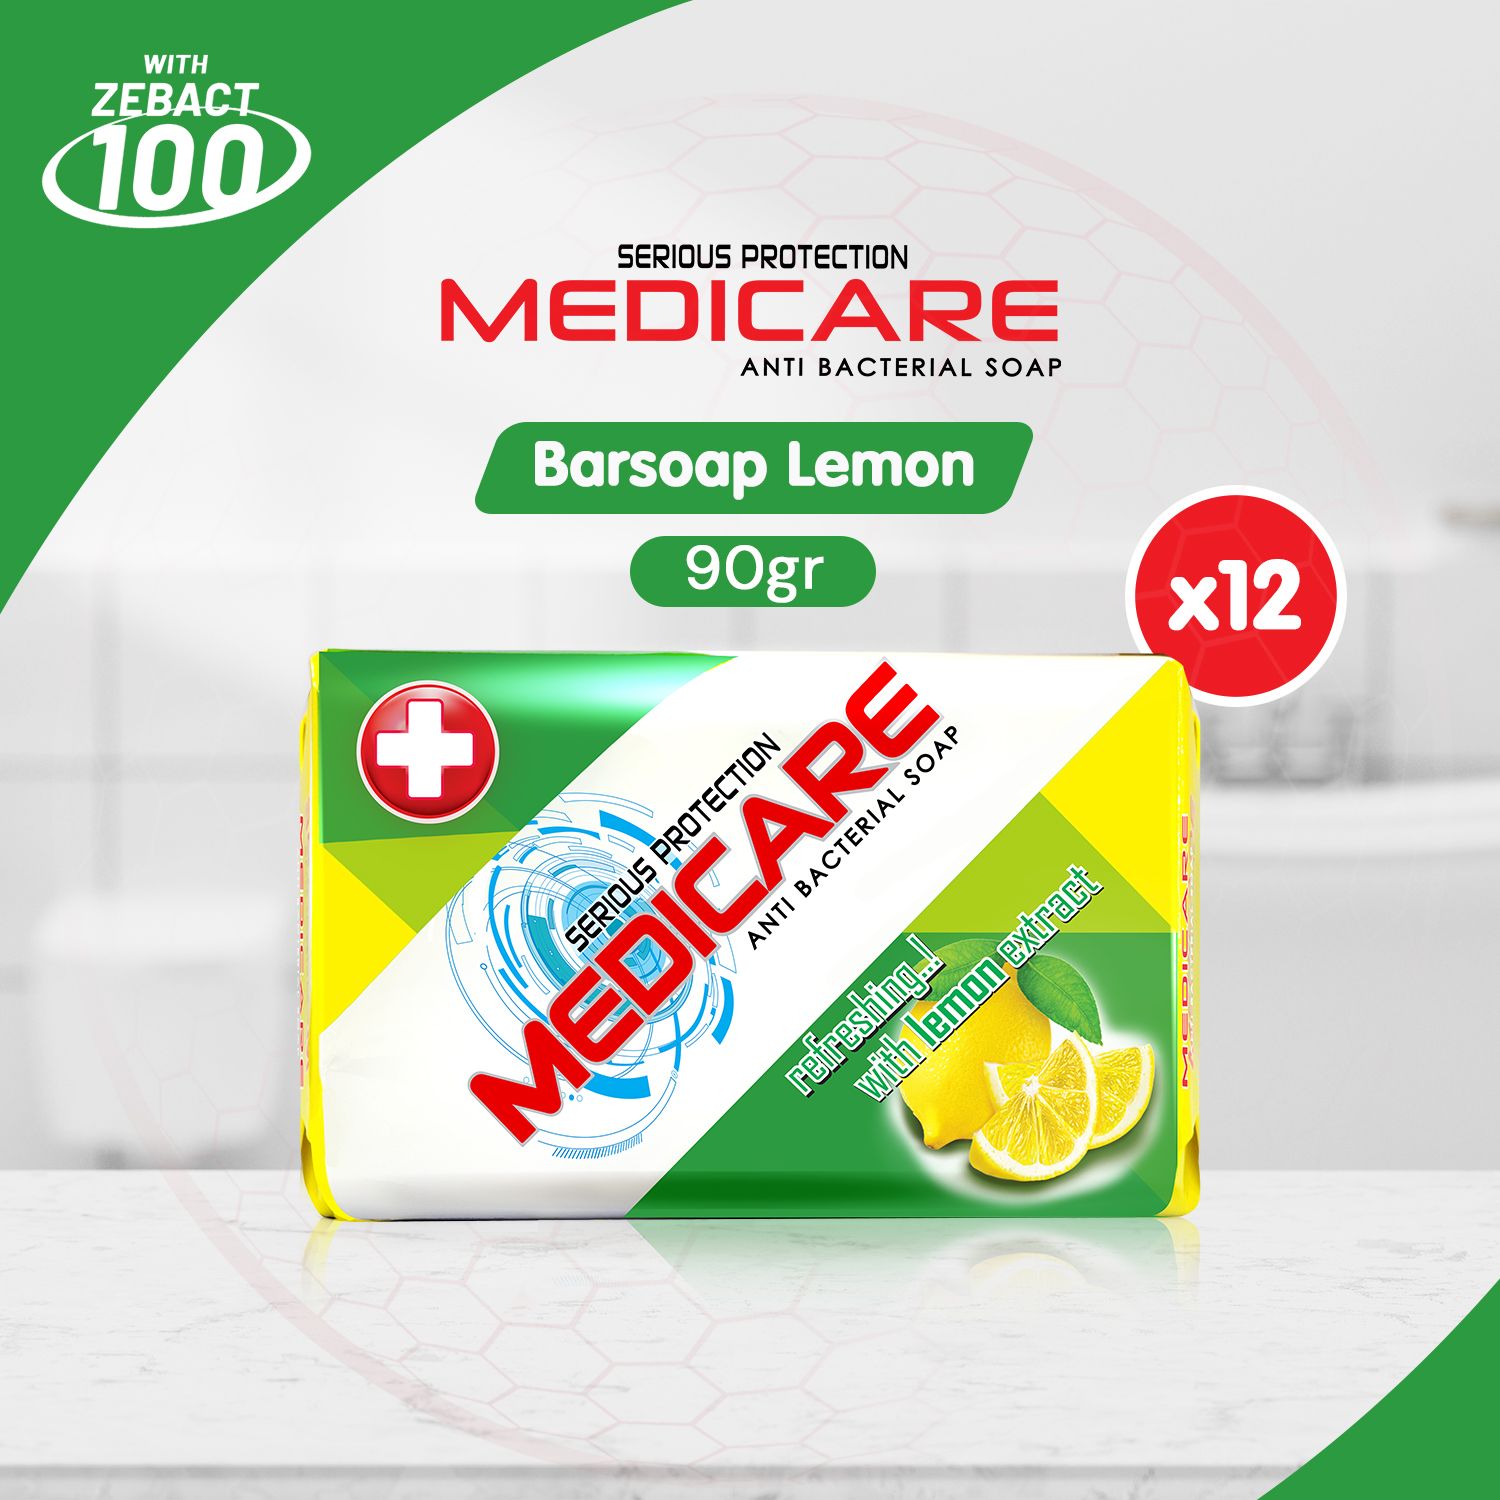 MEDICARE Sabun Antibakteri Lemon 90g (12 pcs) - 1